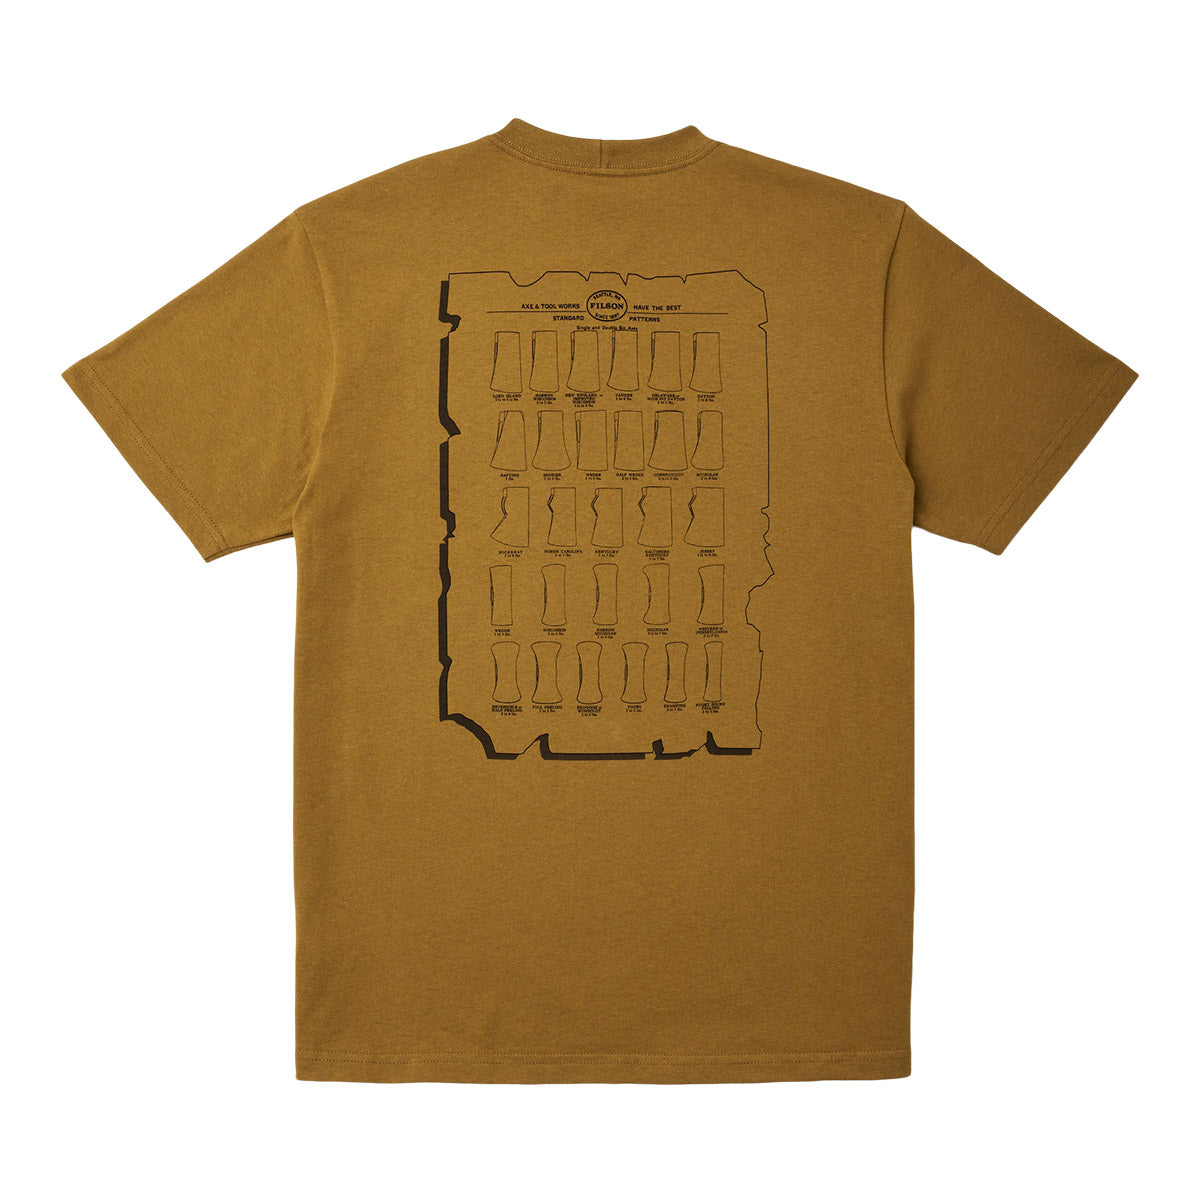 Filson Pioneer Short Sleeve Graphic T-Shirt